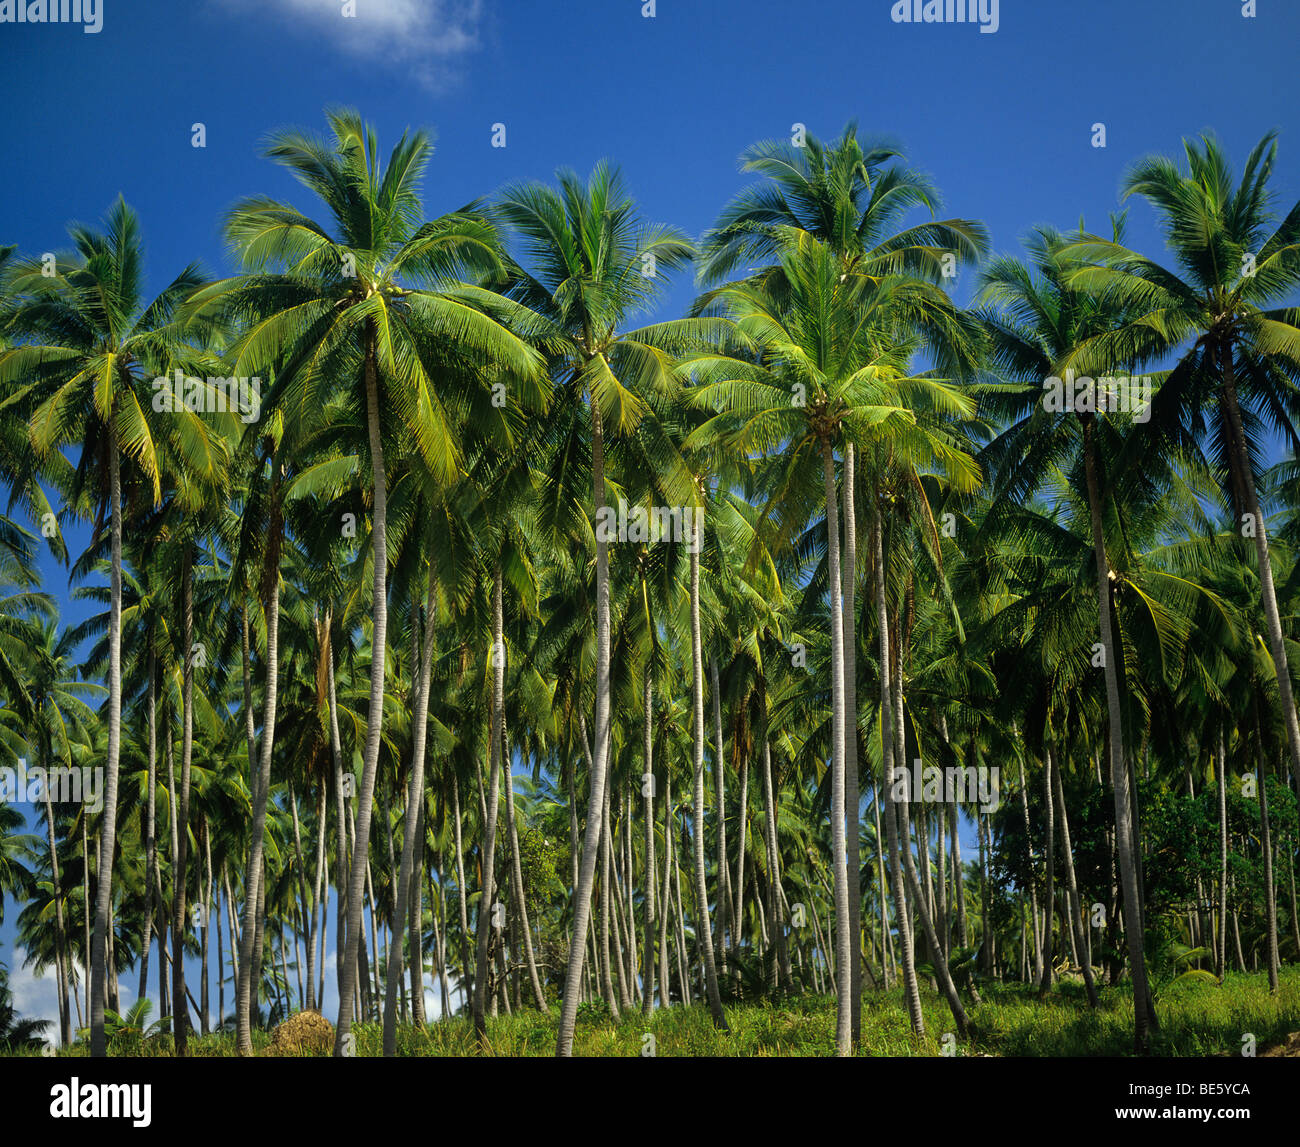 Thailand, Koh Samui, coconut palm grove on Samui Island in the Gulf of Thailand Stock Photo